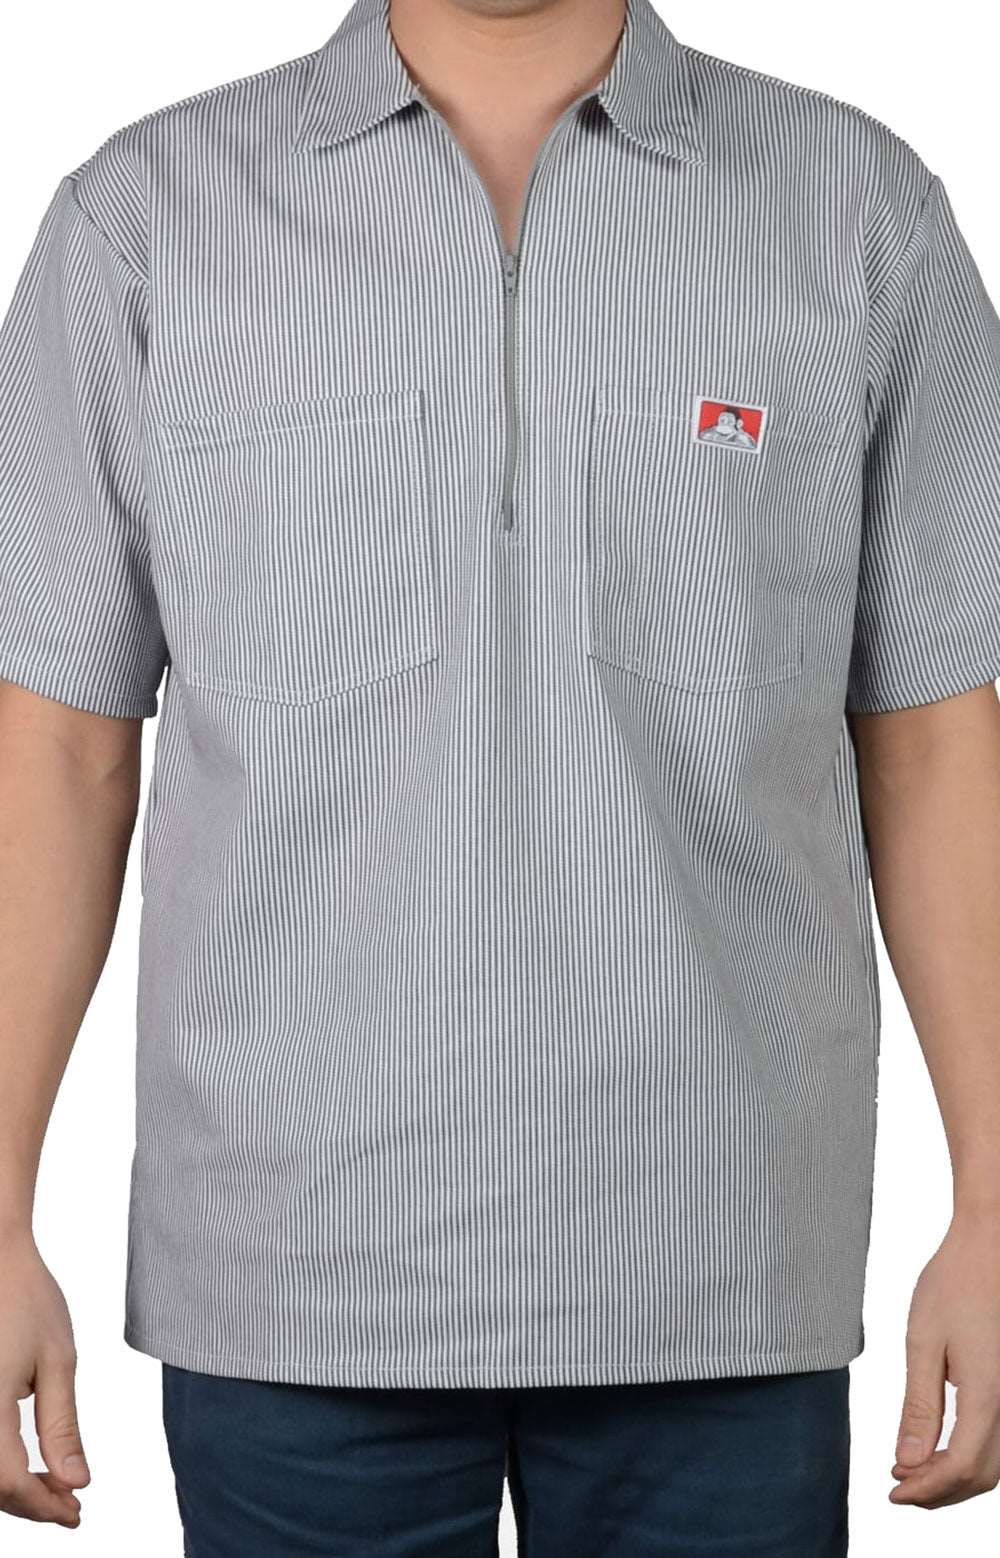 Short Sleeve Stripe 1/2 Zip Shirt - Hickory